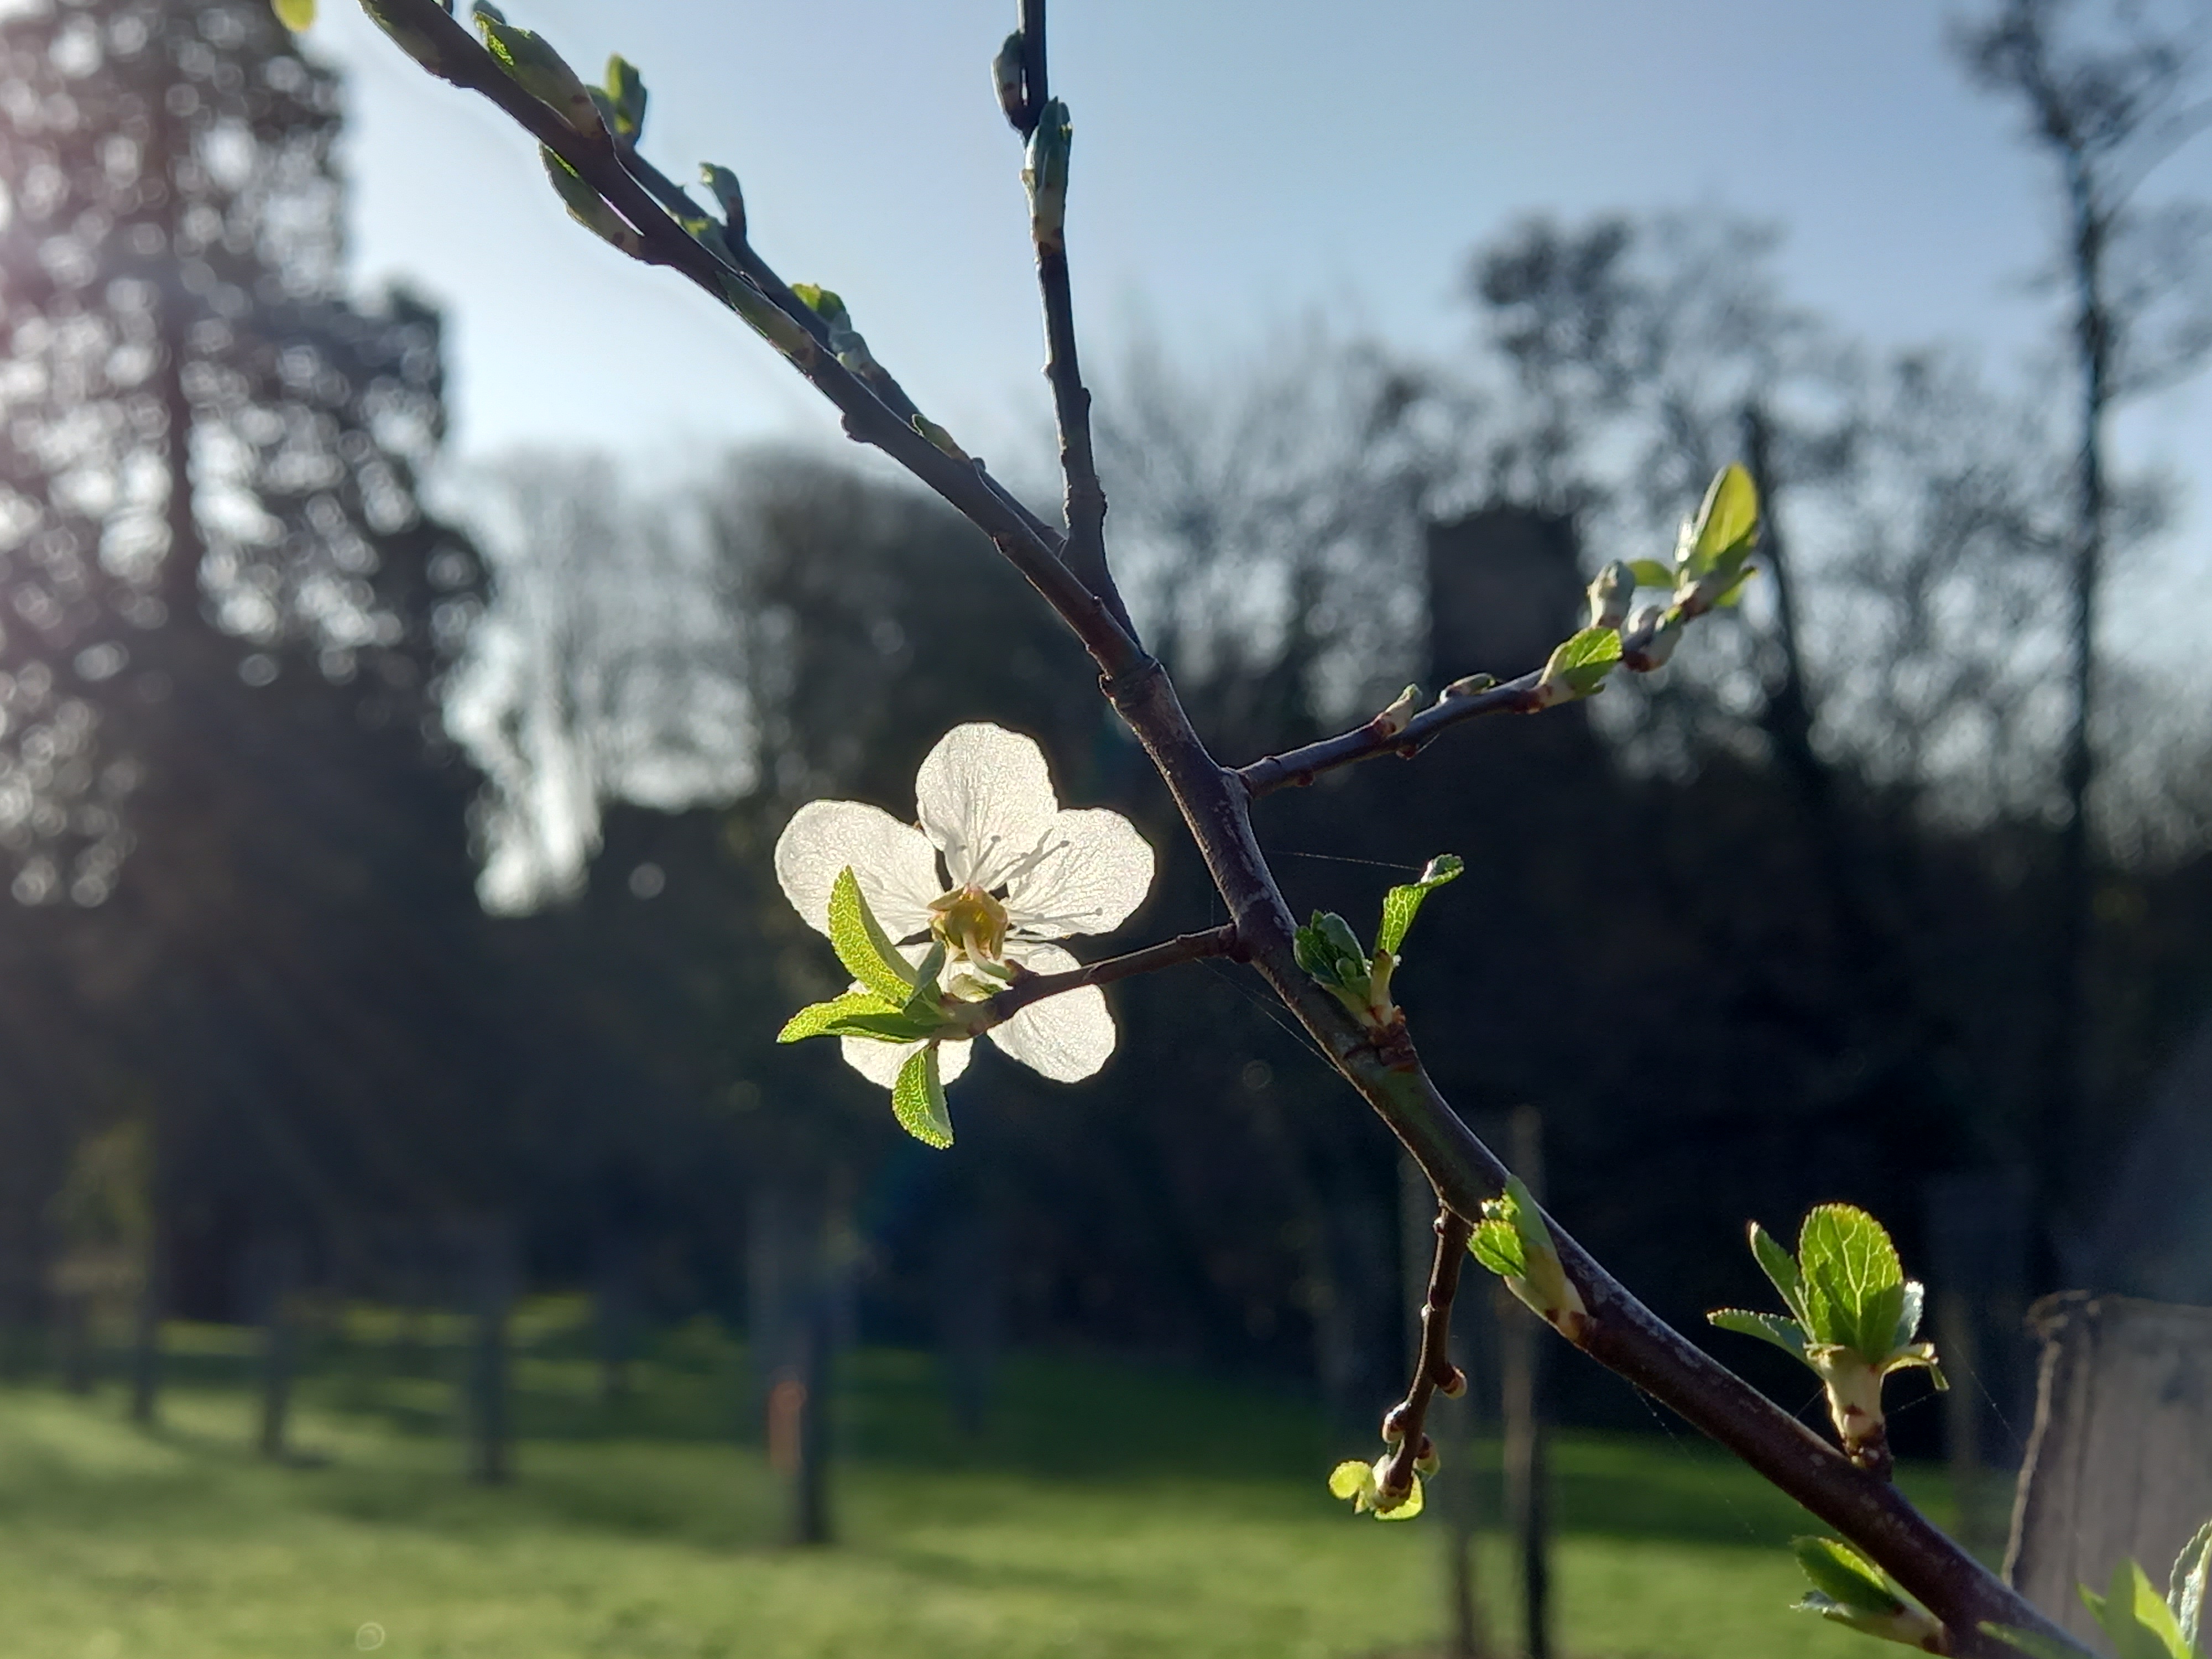 fruit tree blossom